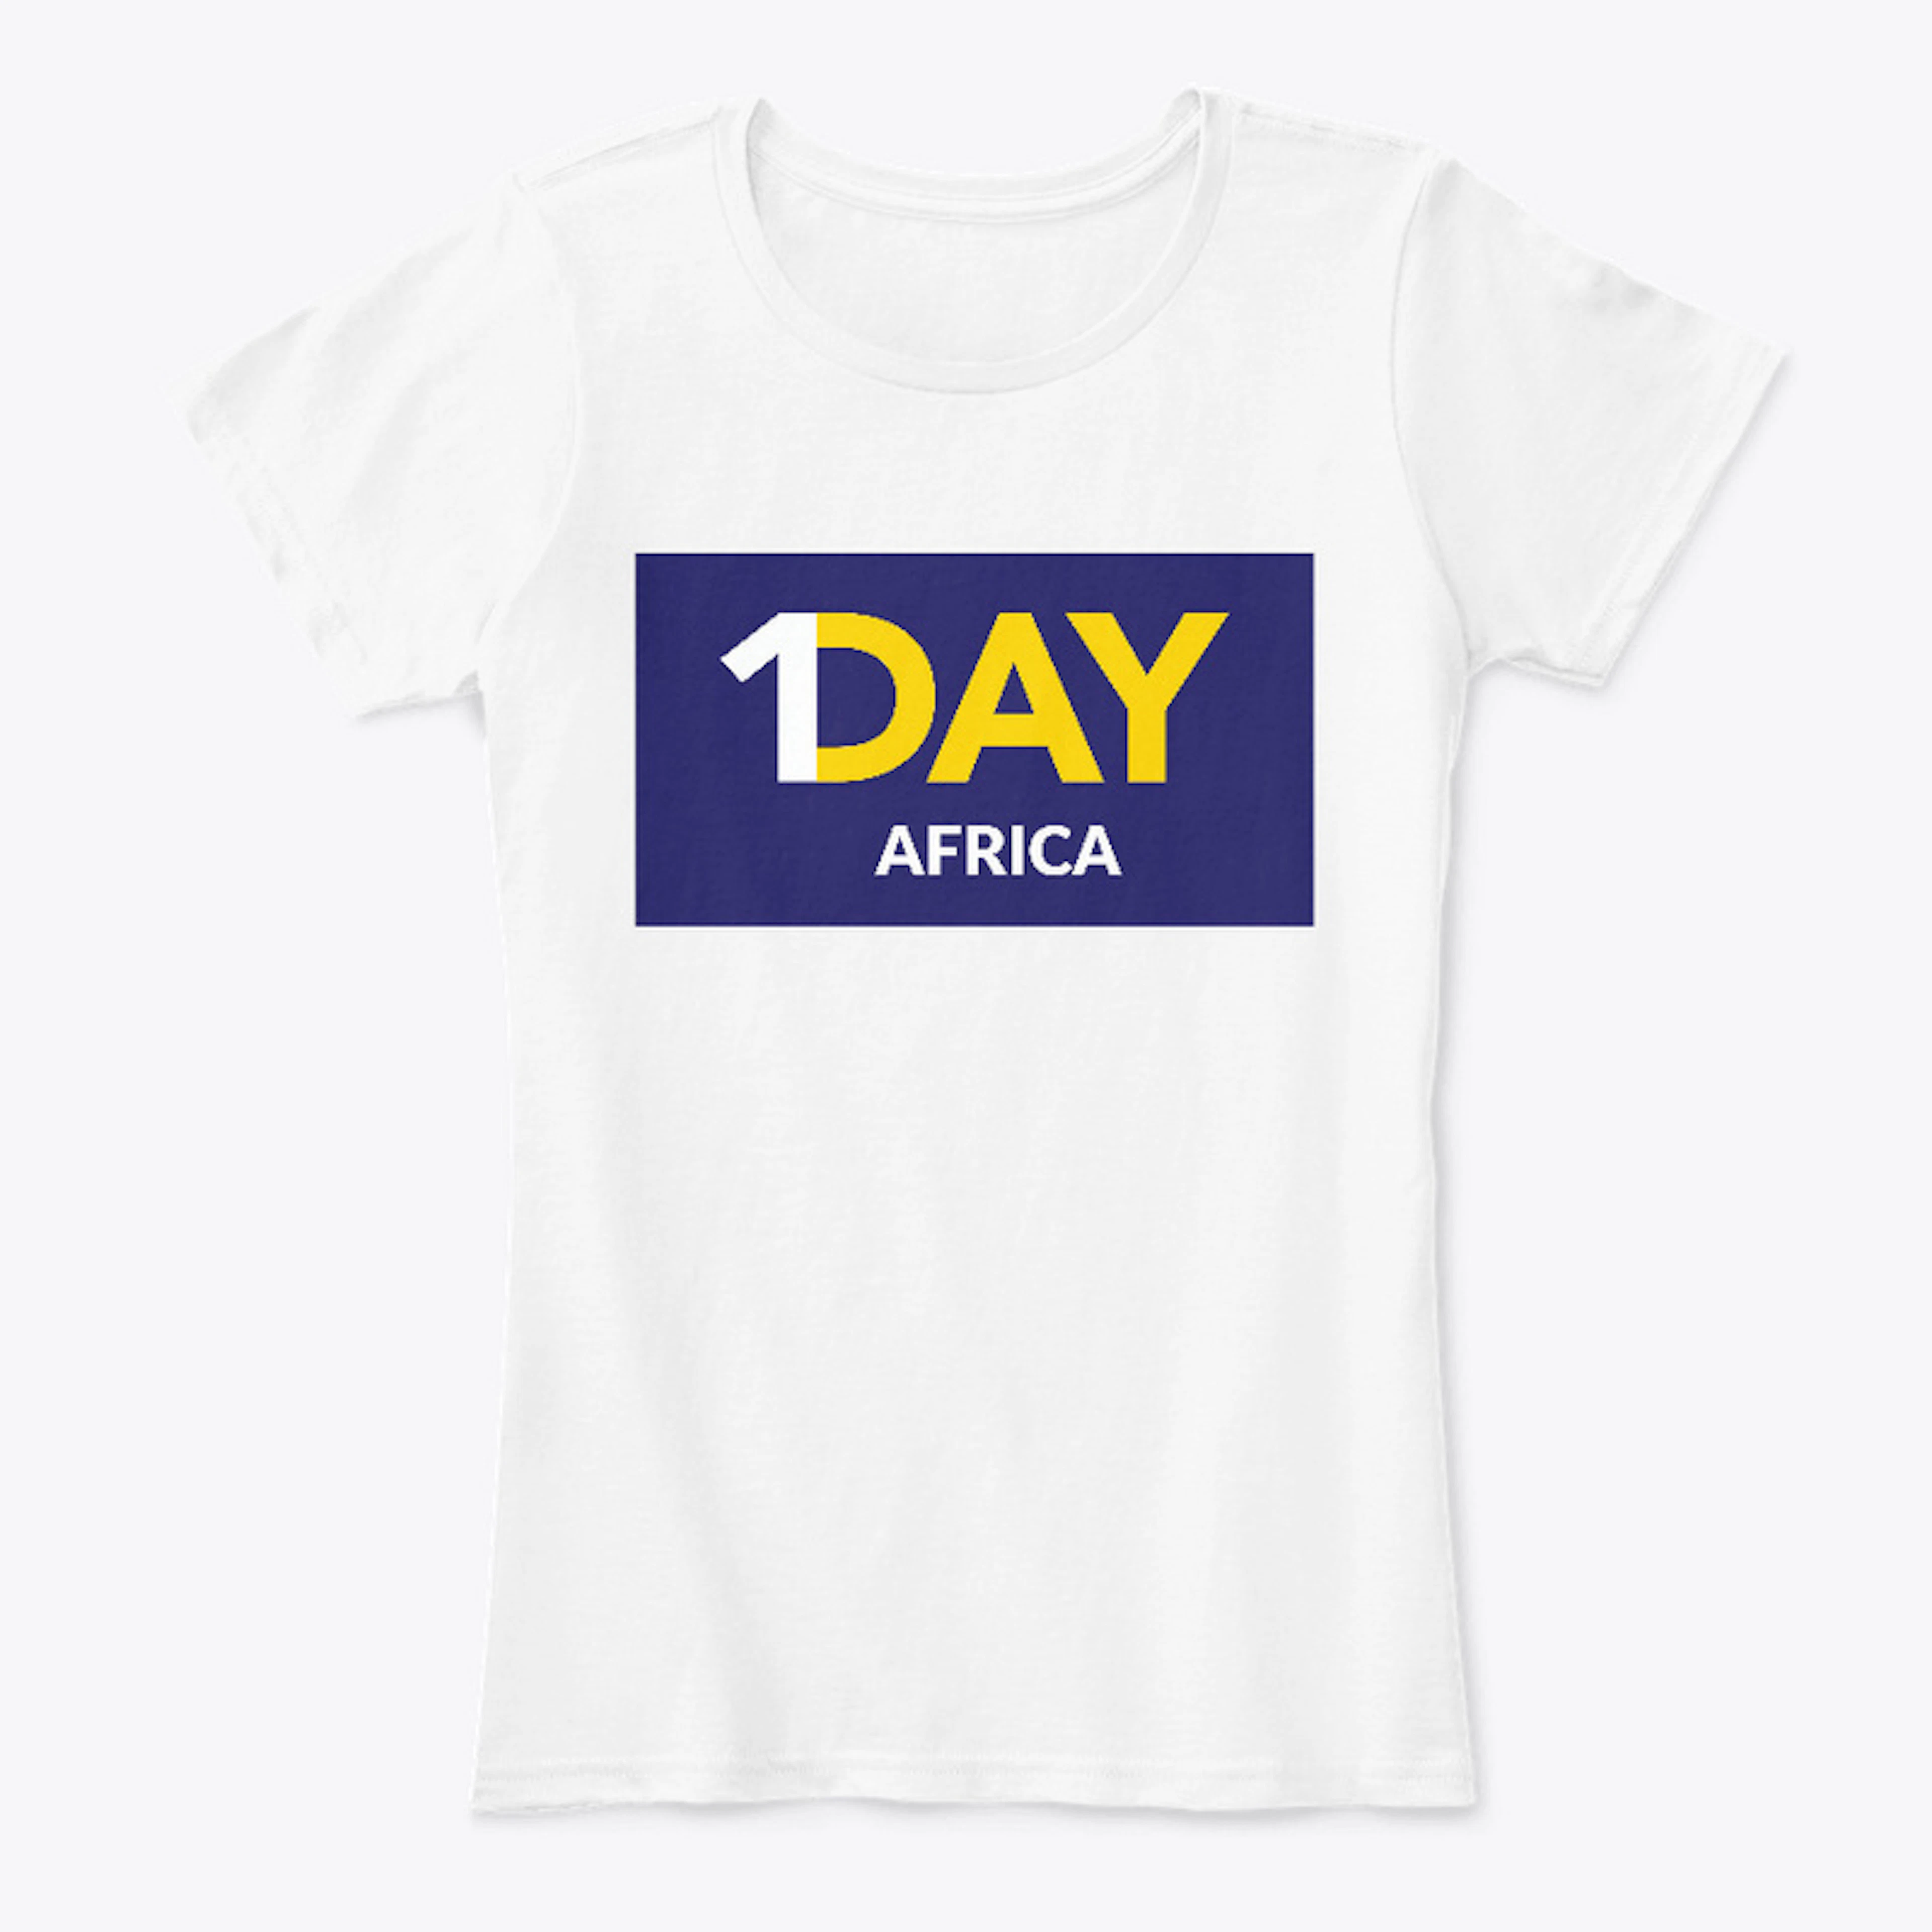 1Day Africa T-Shirt